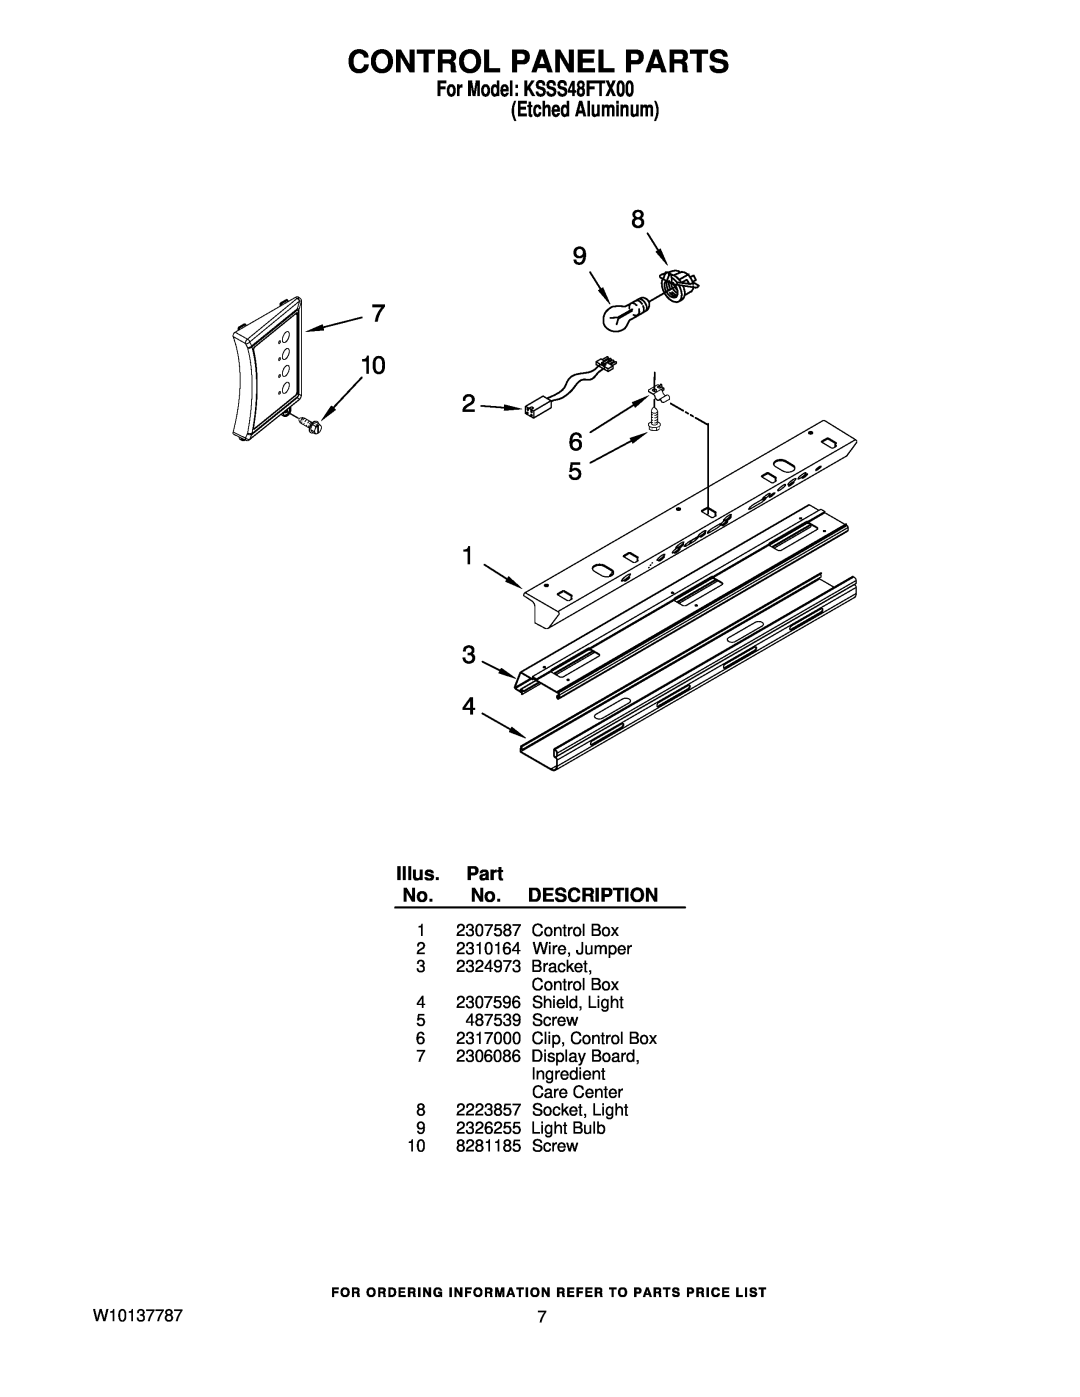 KitchenAid manual Control Panel Parts, For Model KSSS48FTX00 Etched Aluminum, Illus. Part No. No. DESCRIPTION 